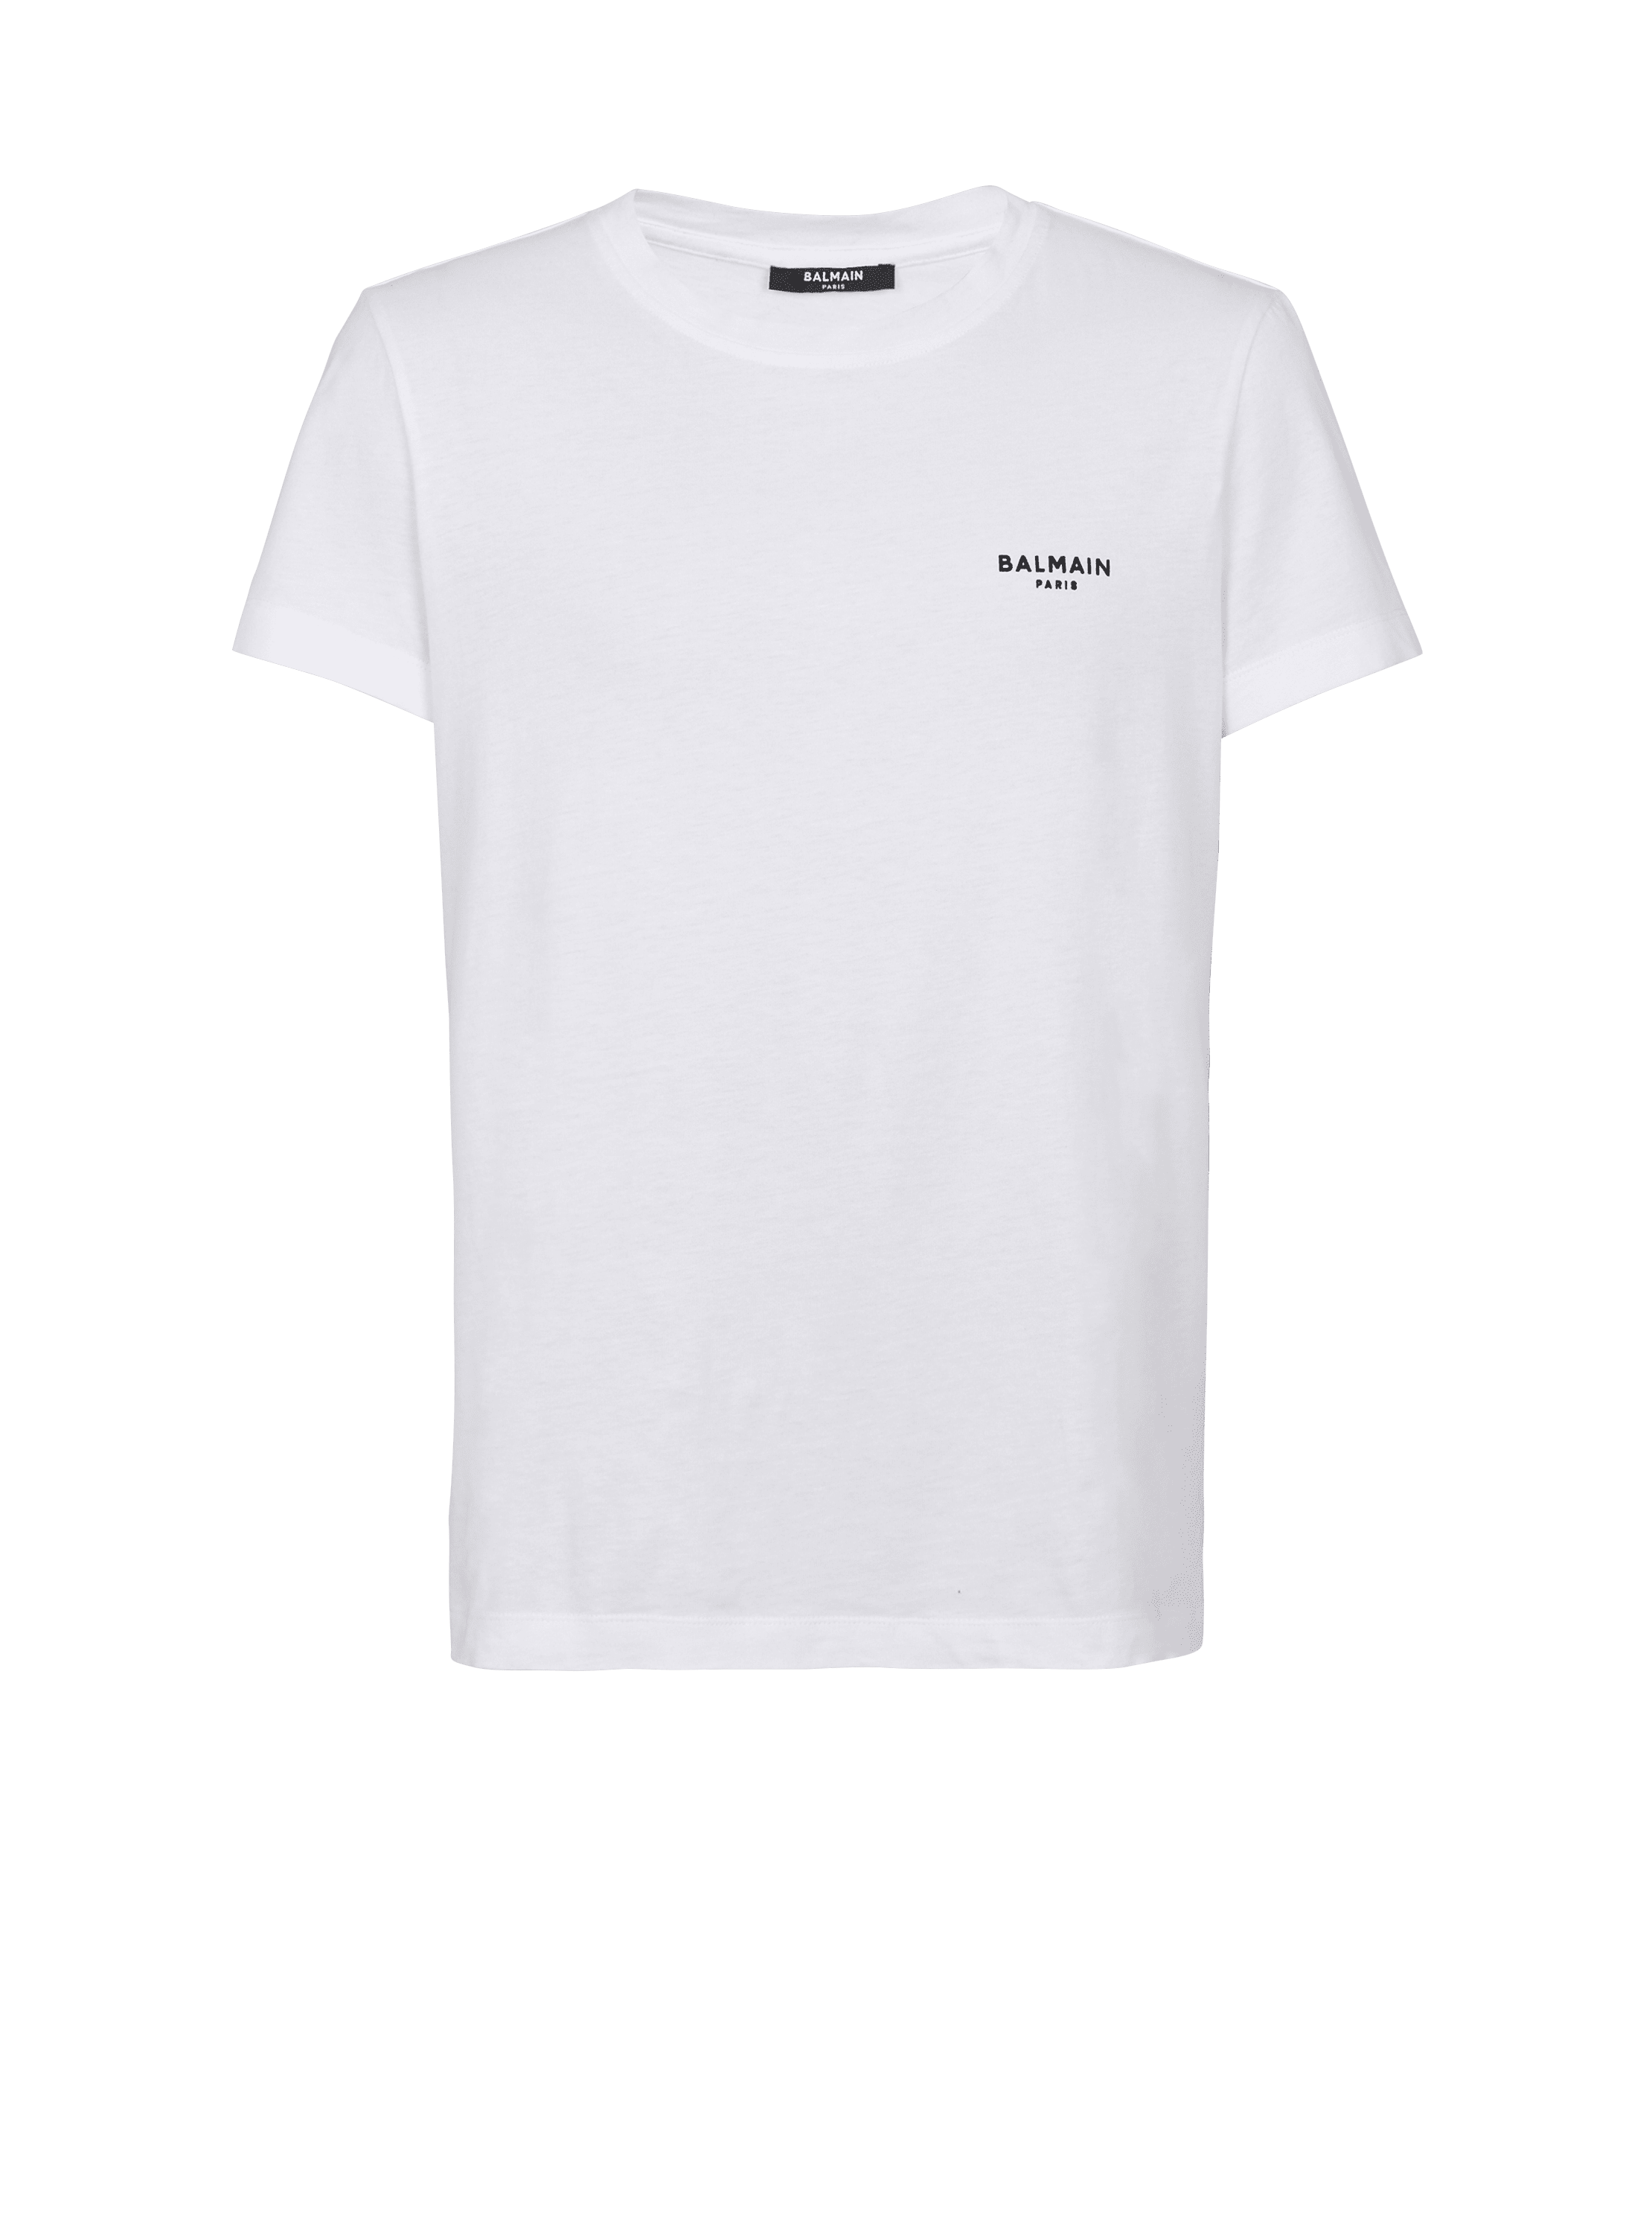 Flocked Balmain T-shirt, white, hi-res